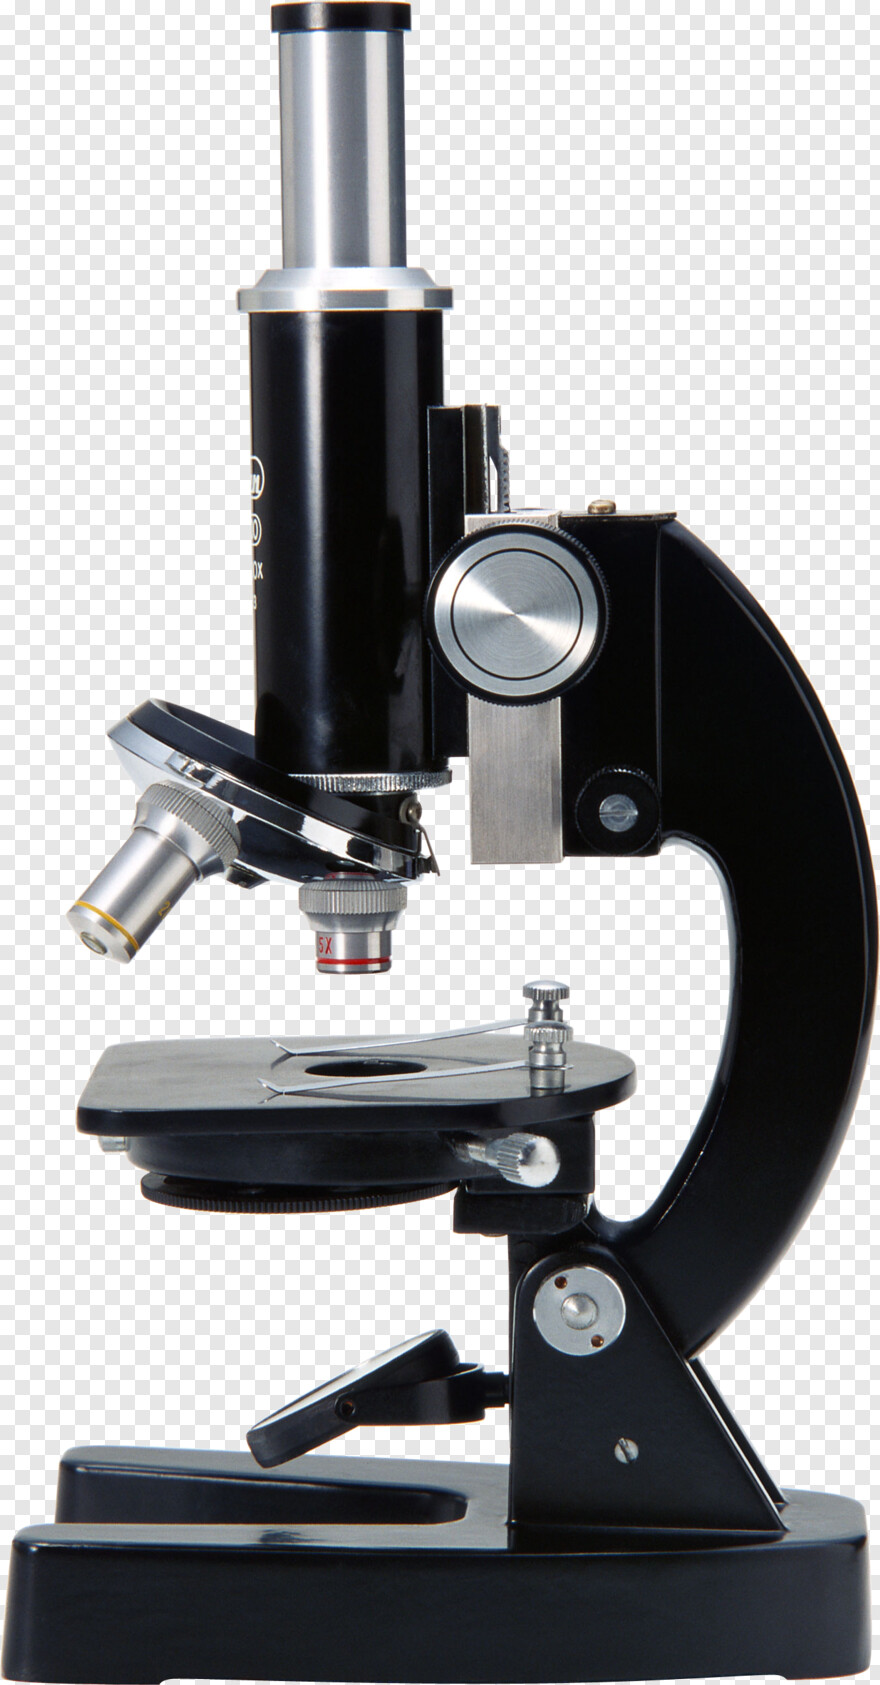 microscope # 692267